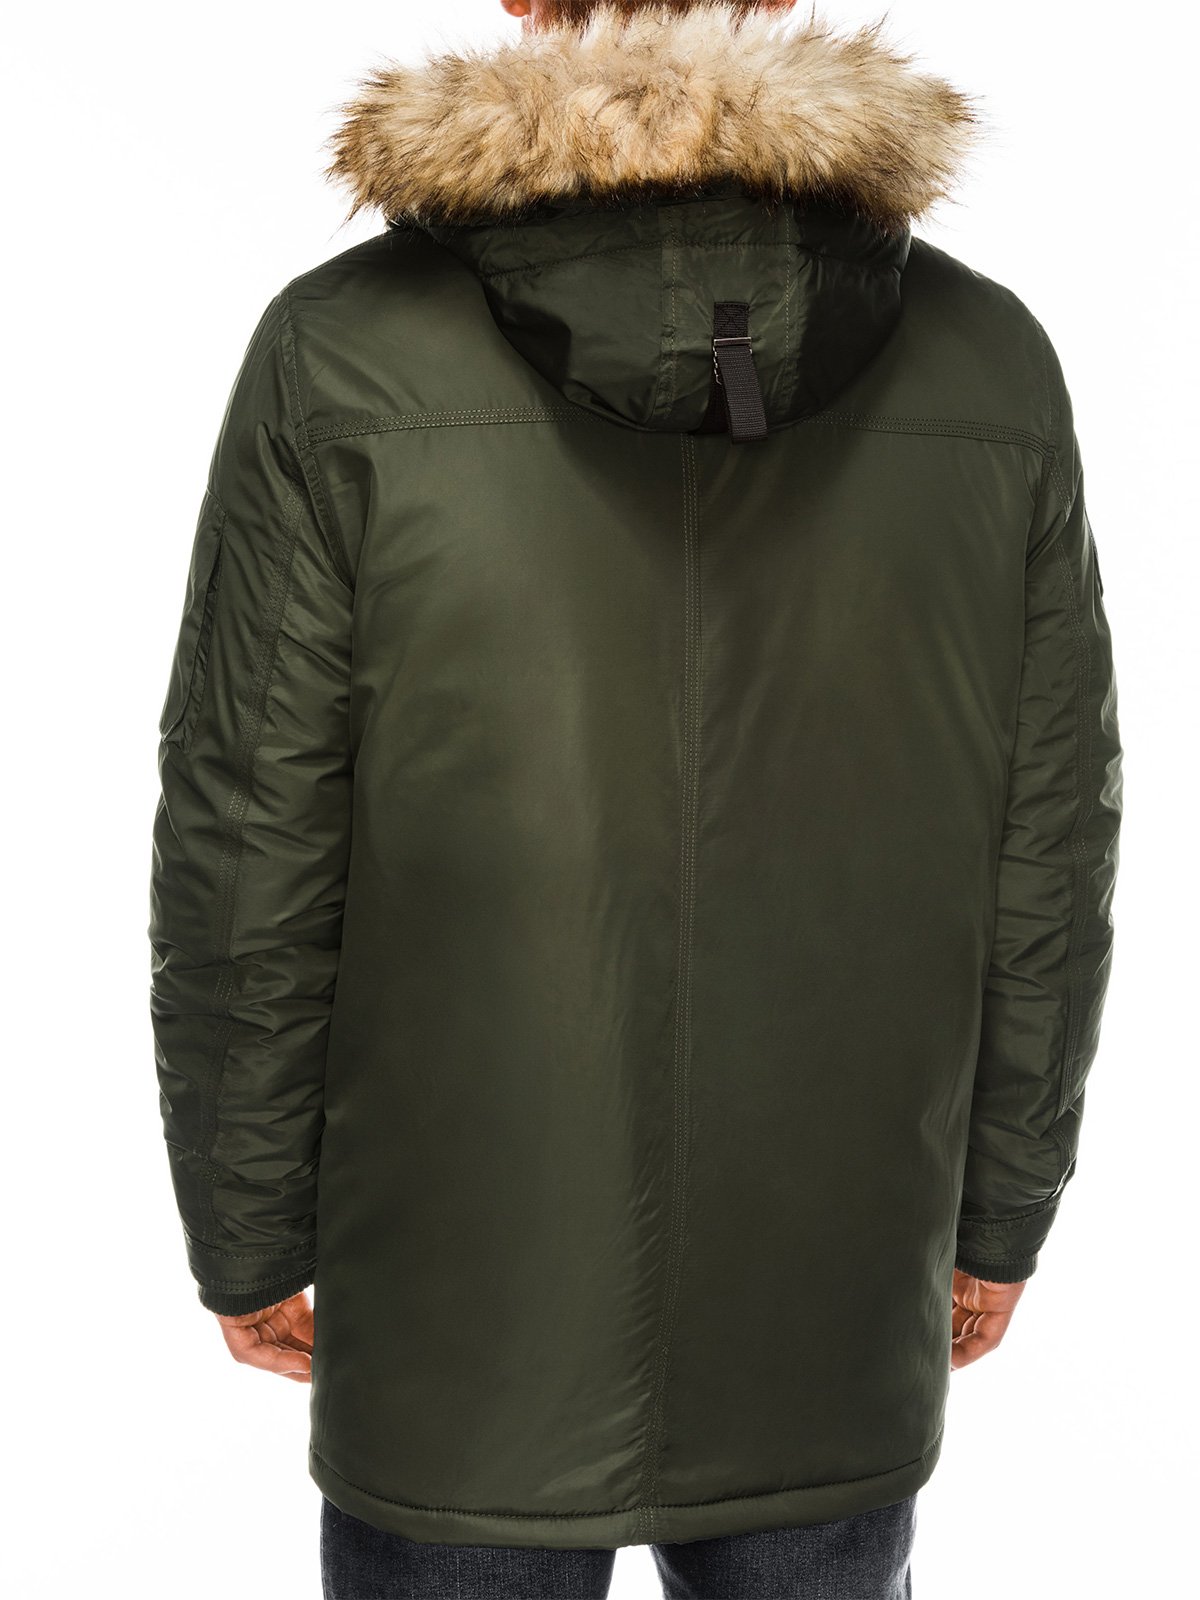 Men's winter parka jacket - khaki C360 | MODONE wholesale - Clothing ...